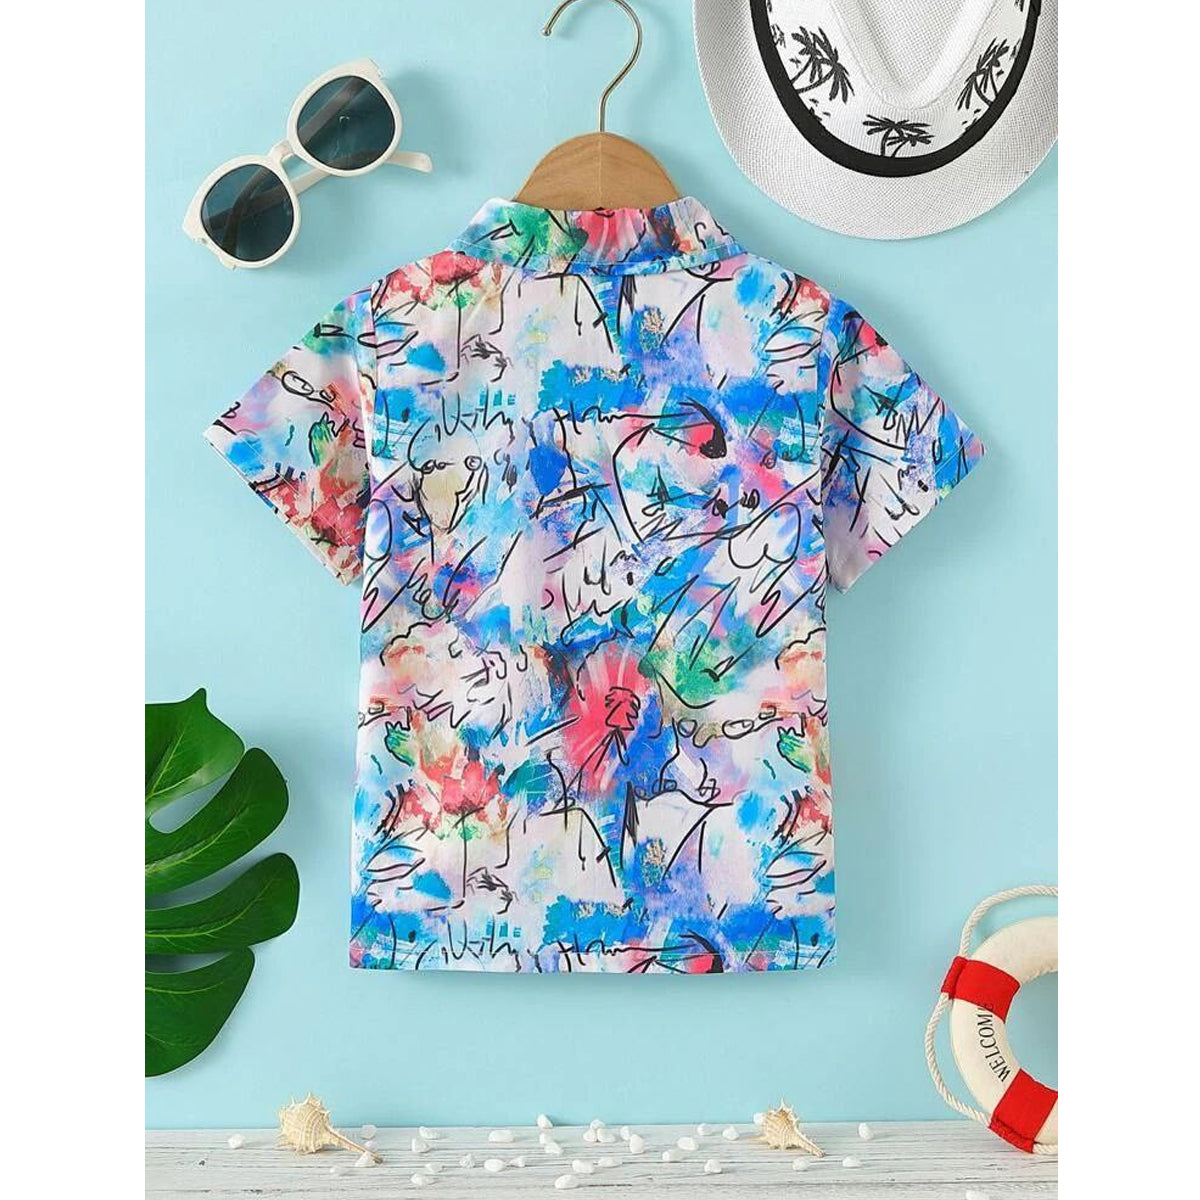 Venutaloza Rainbow Multi Color Designer Button Front Shirt For Boy.